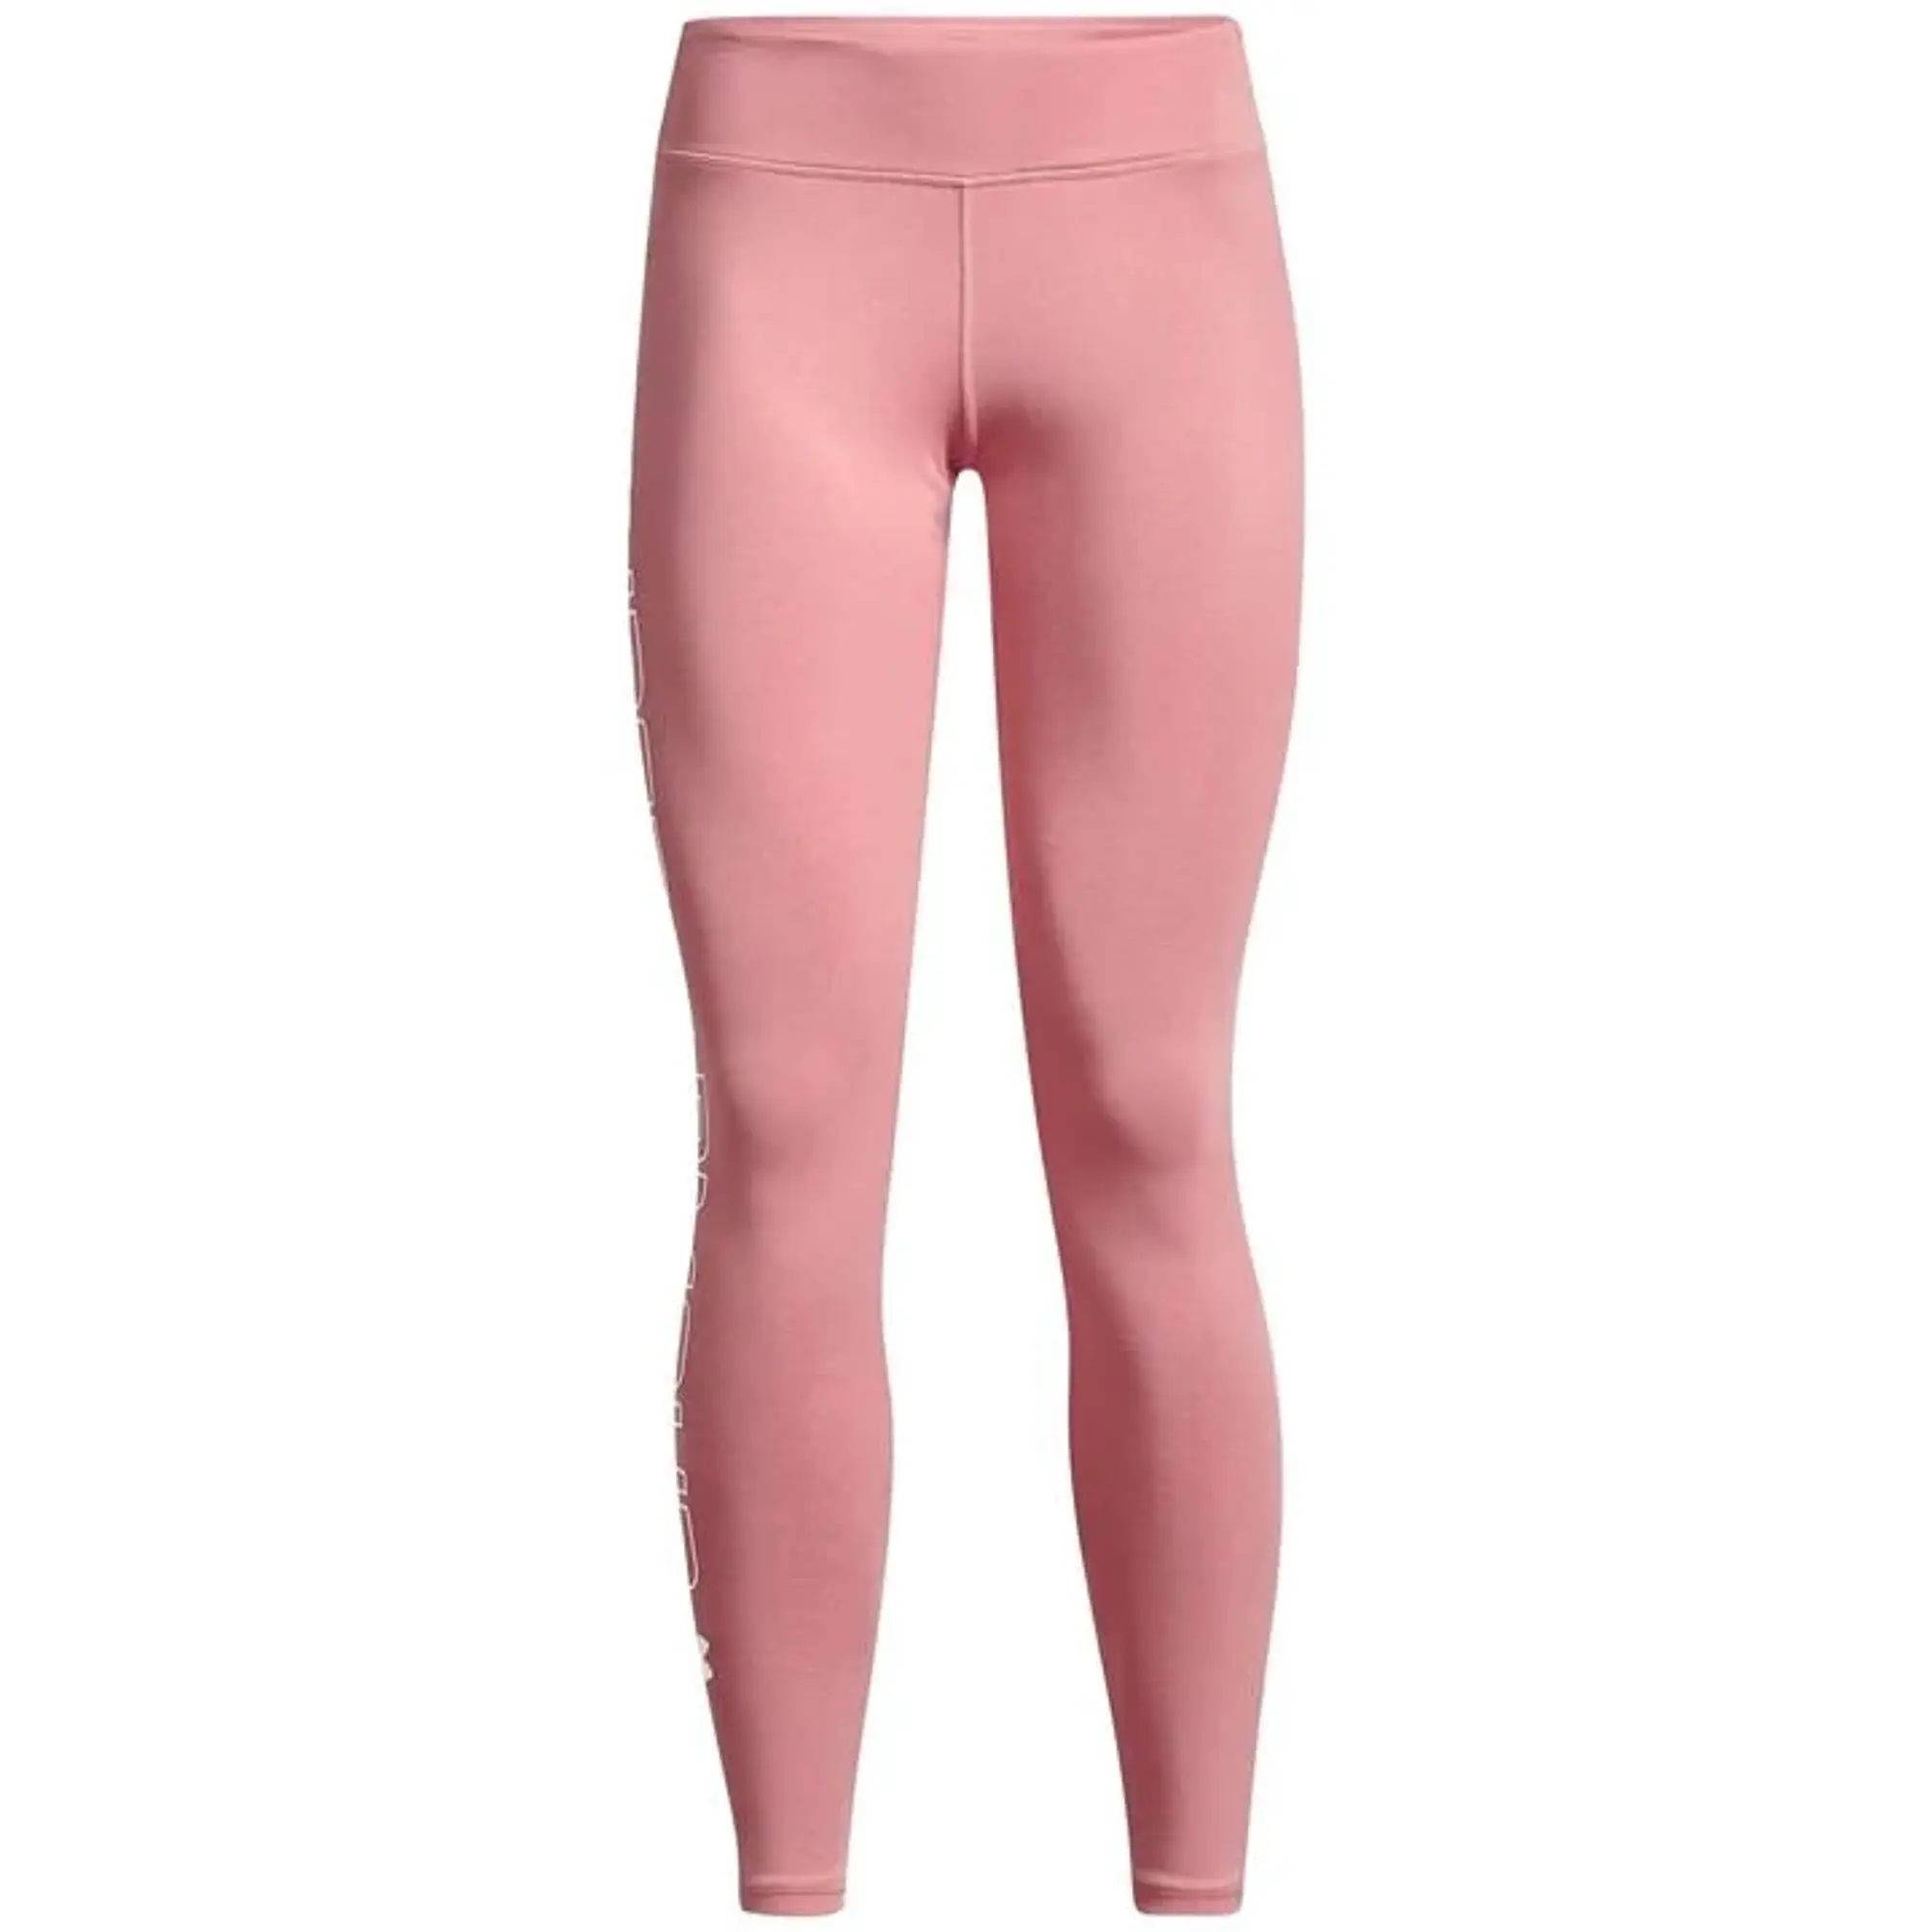 Under Armour Favourite Wordmark Womens Legging – Pink, 1356403-663